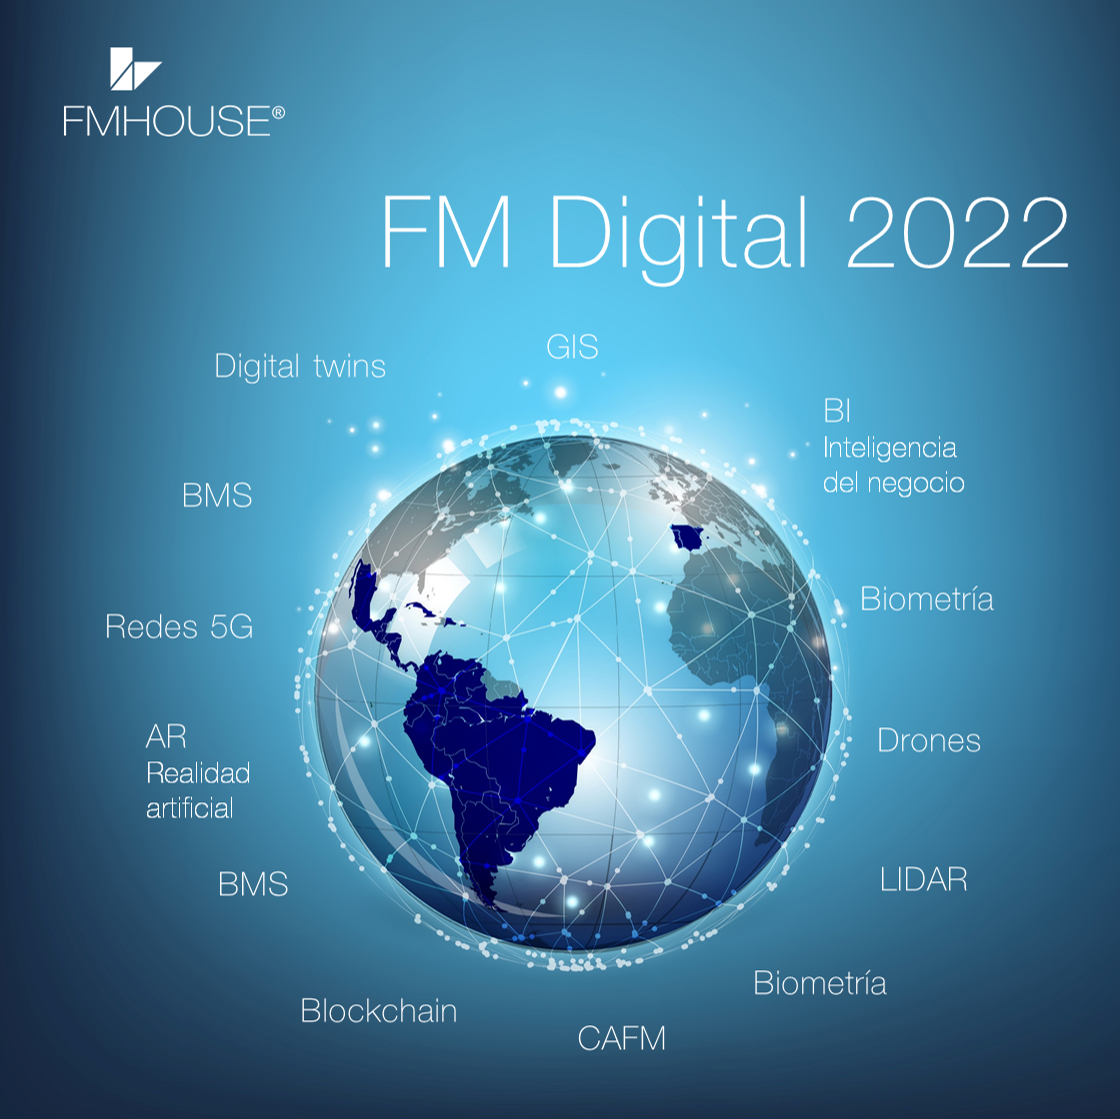 Las tecnologias del FM en Iberoamerica